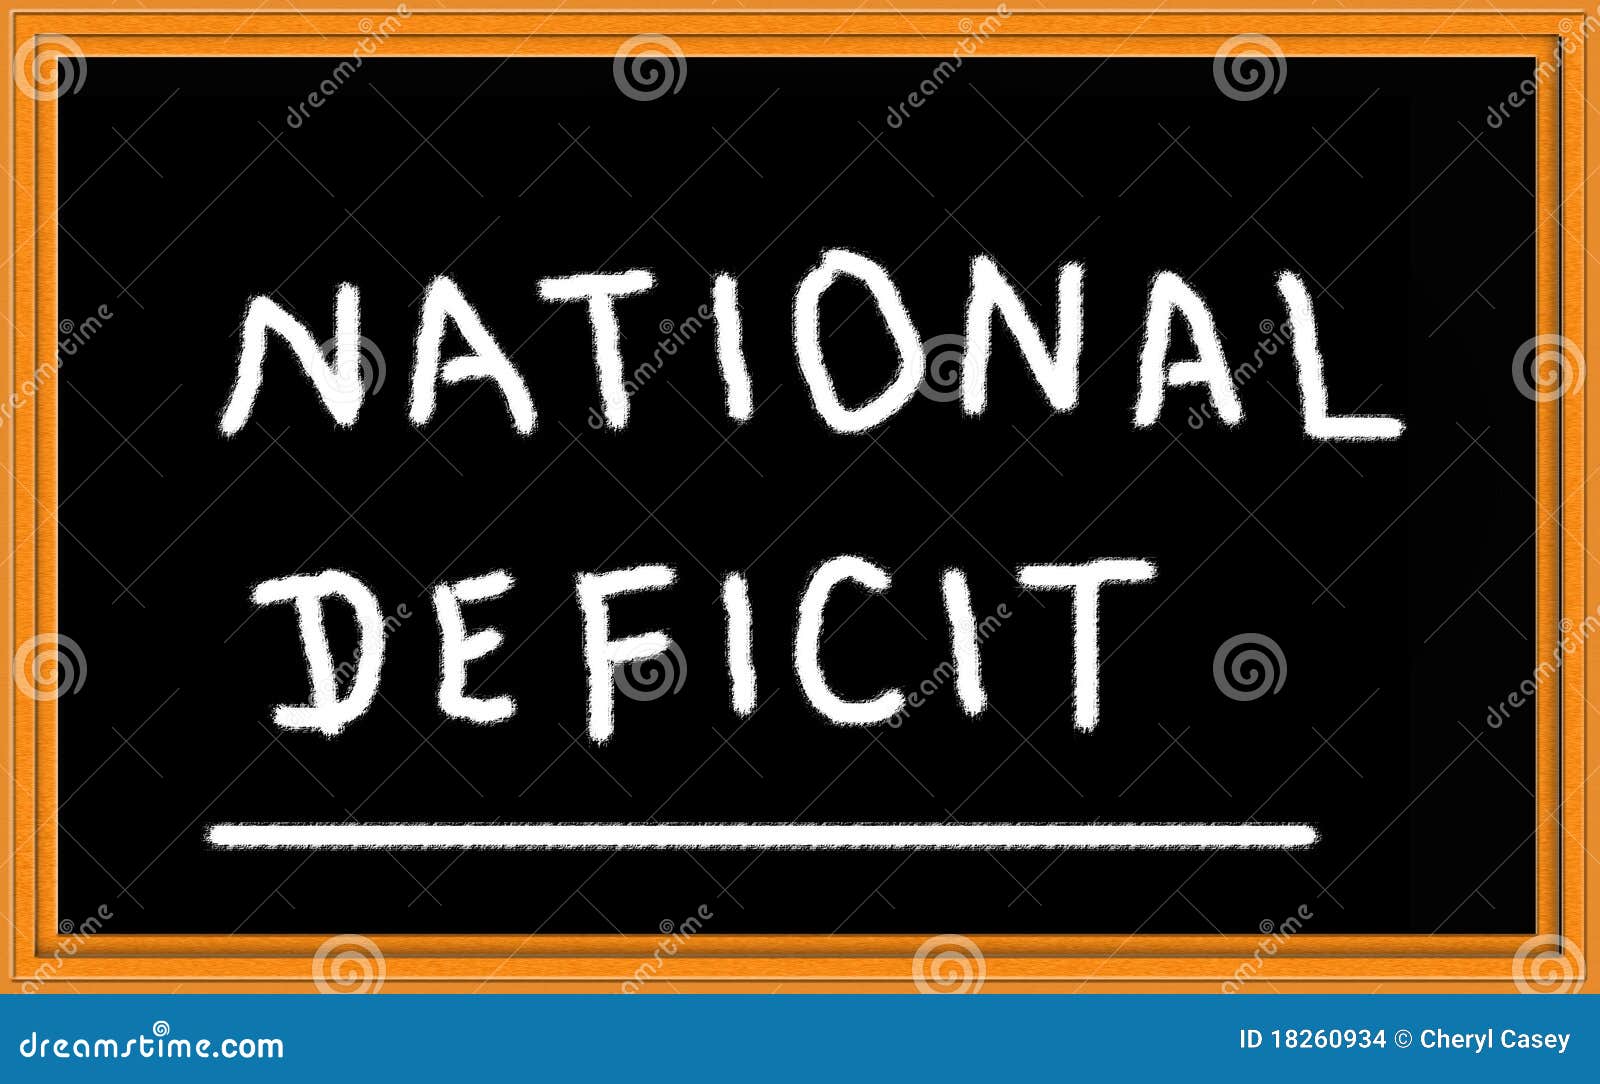 national deficit